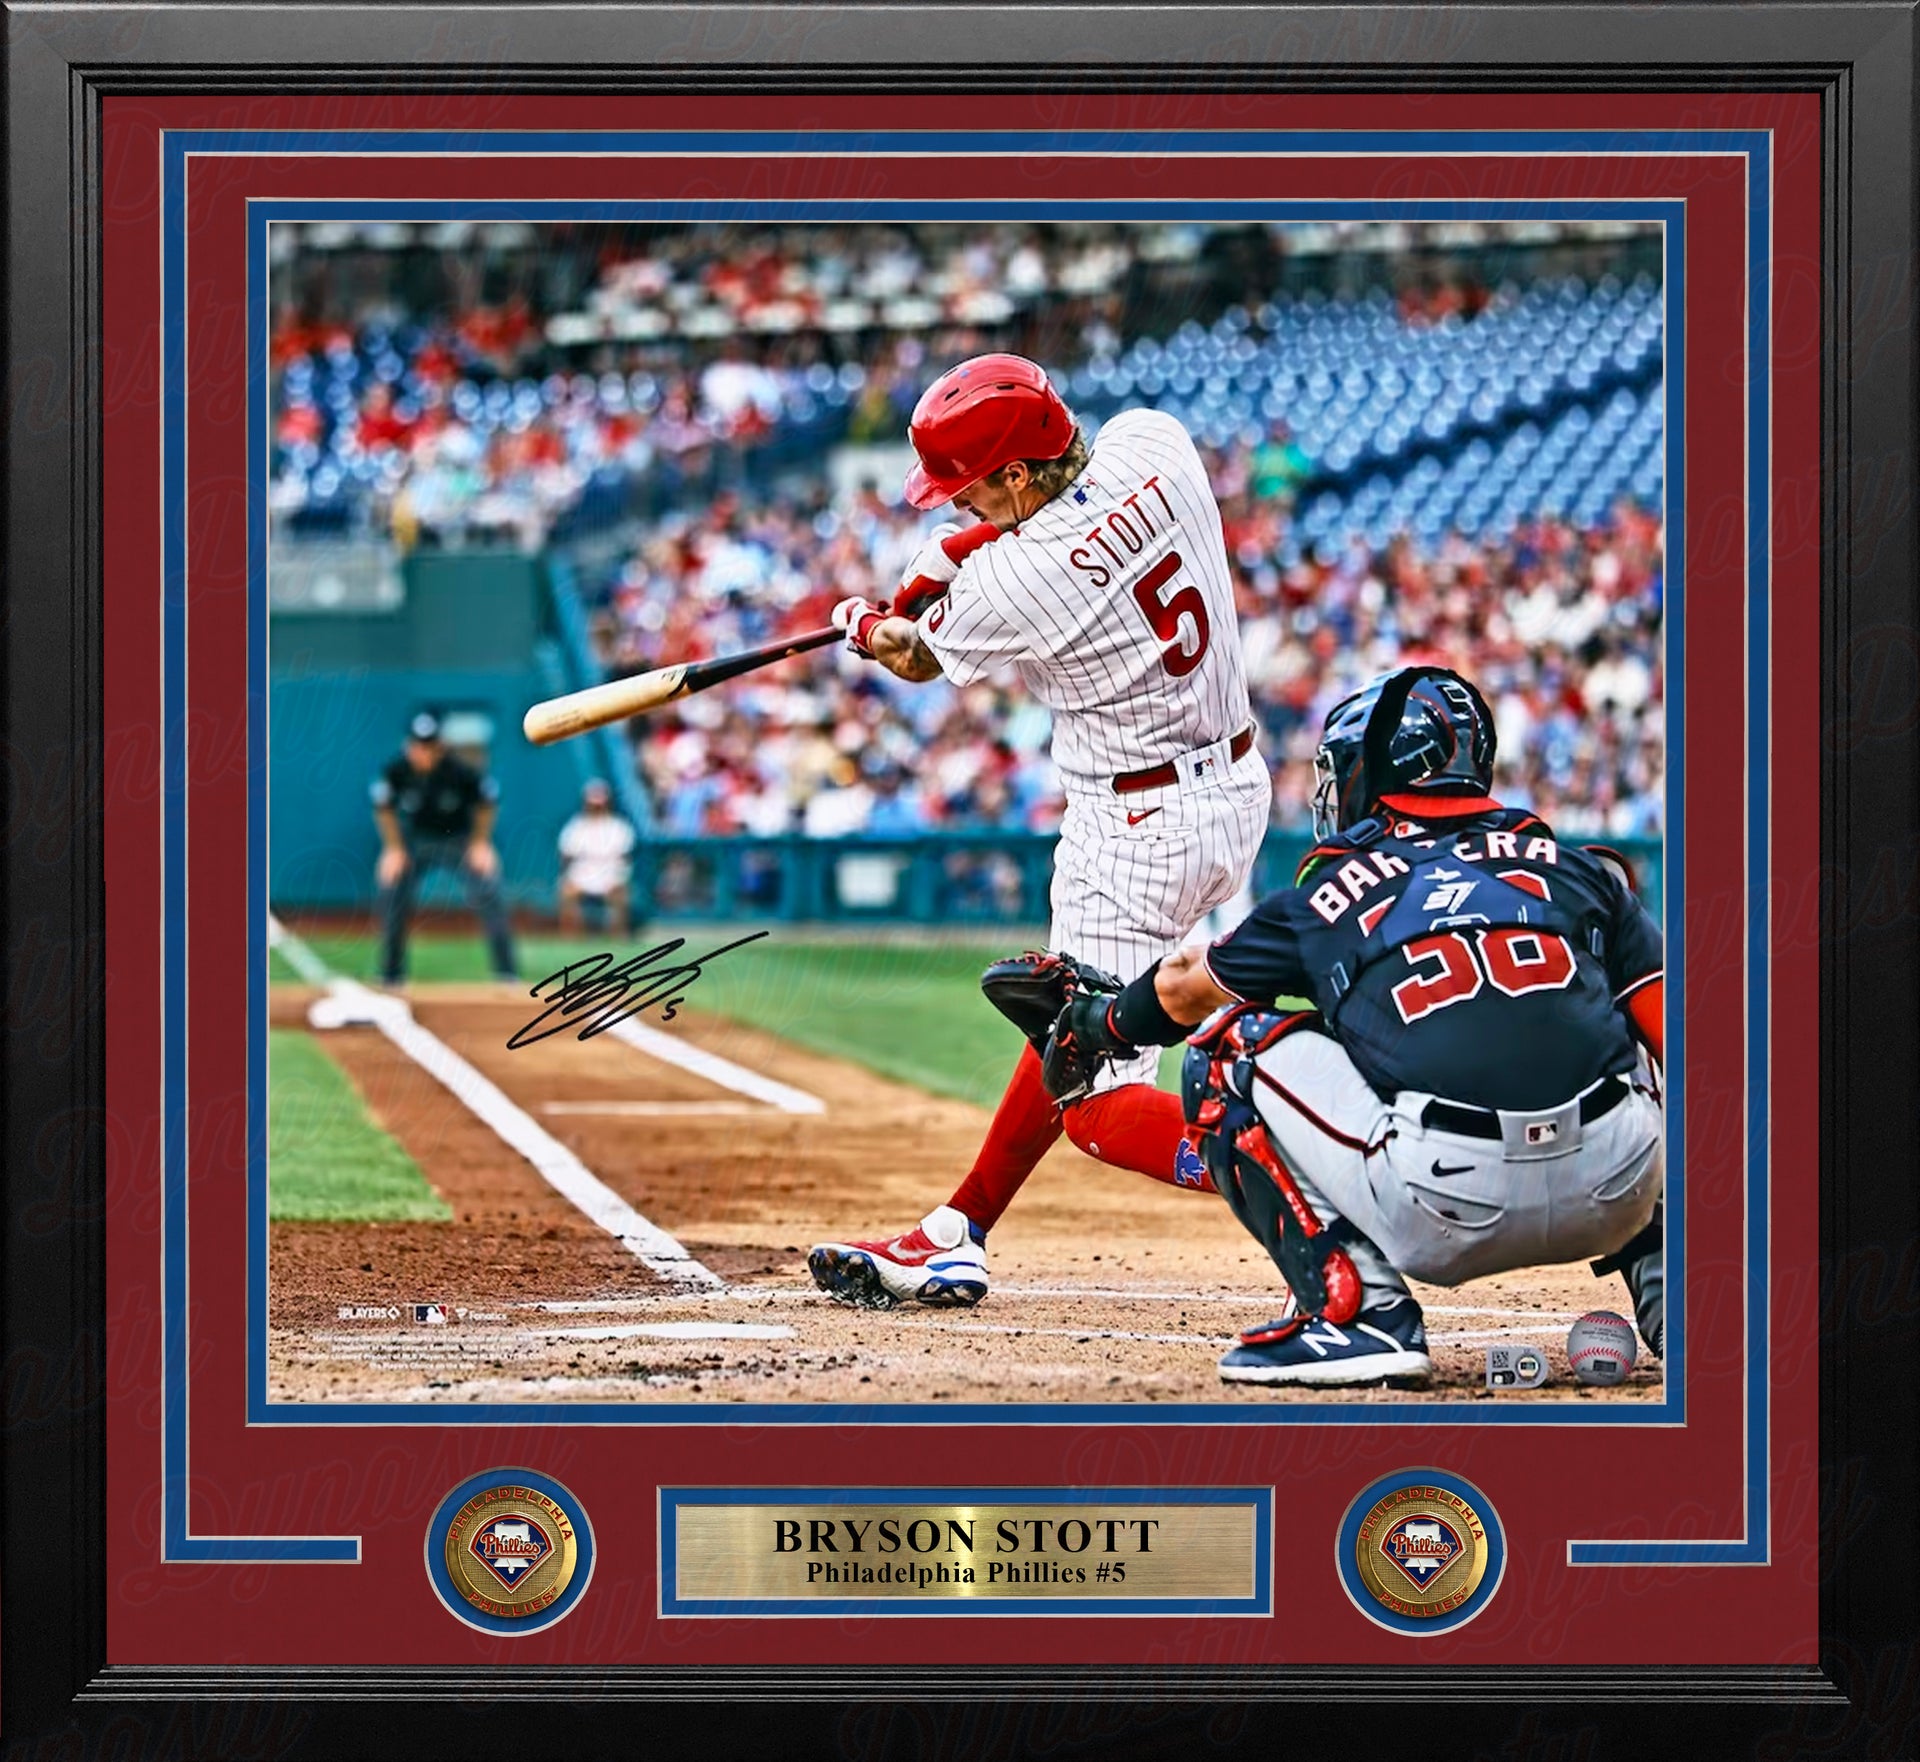 Bryson Stott Home Run Swing Philadelphia Phillies Autographed 16" x 20" Framed Baseball Photo - Dynasty Sports & Framing 